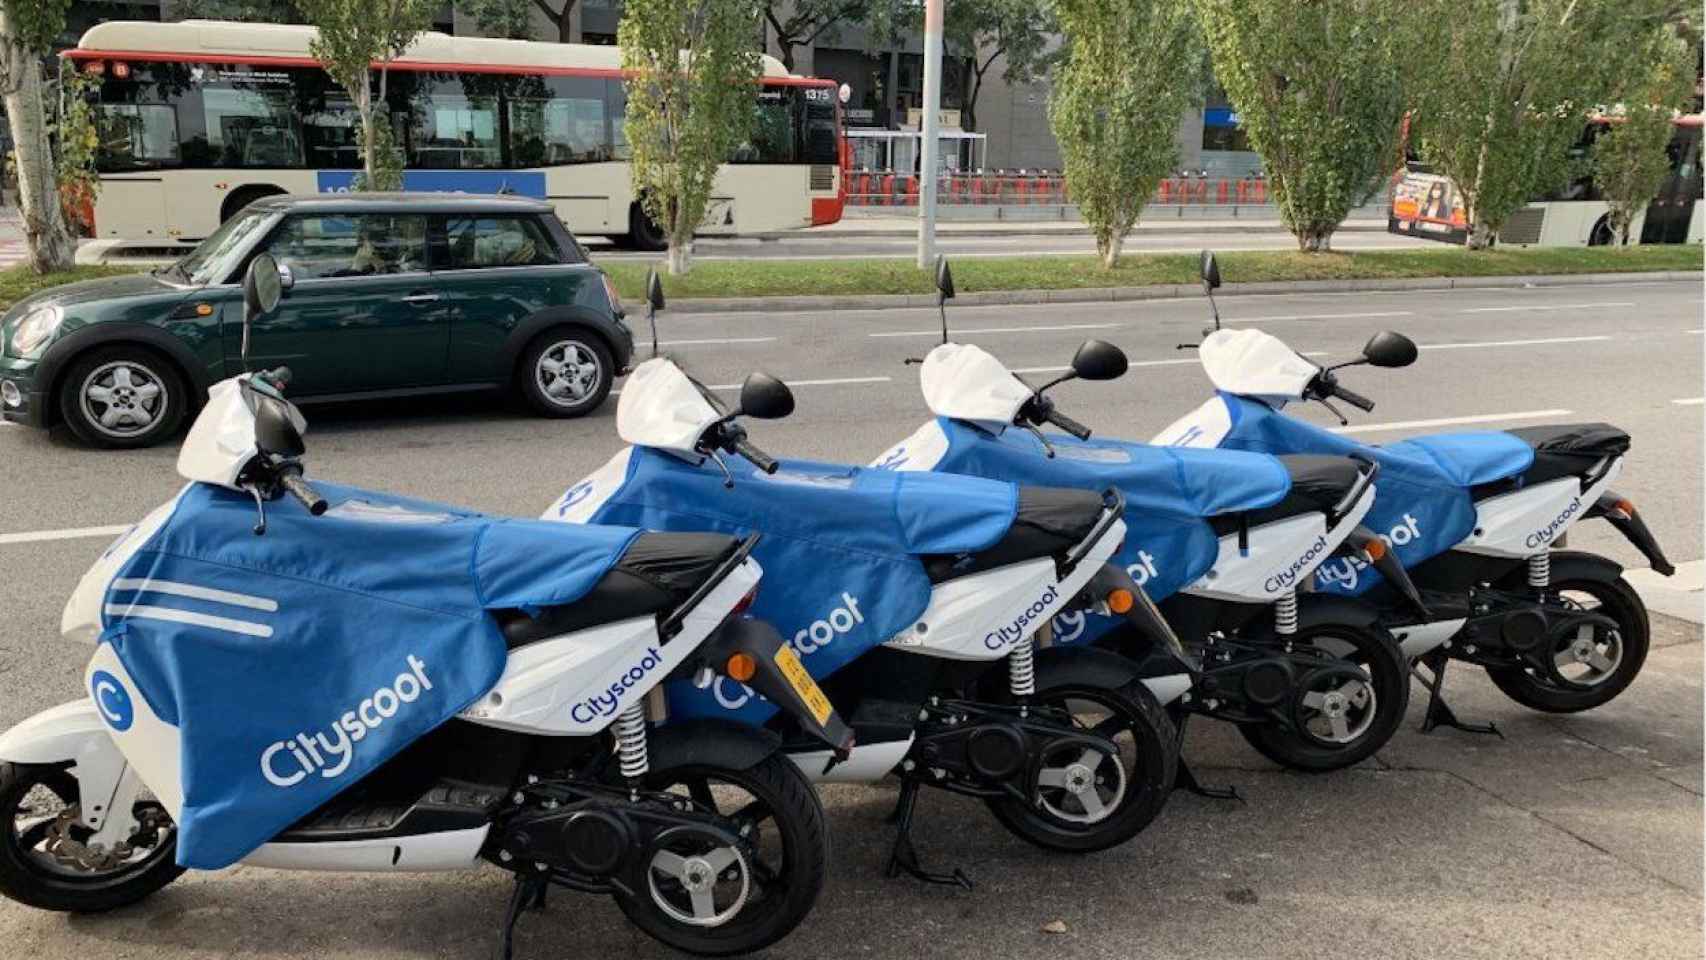 Motos de Cityscoot, operador francés de referencia de 'motosharing' / CITYSCOOT